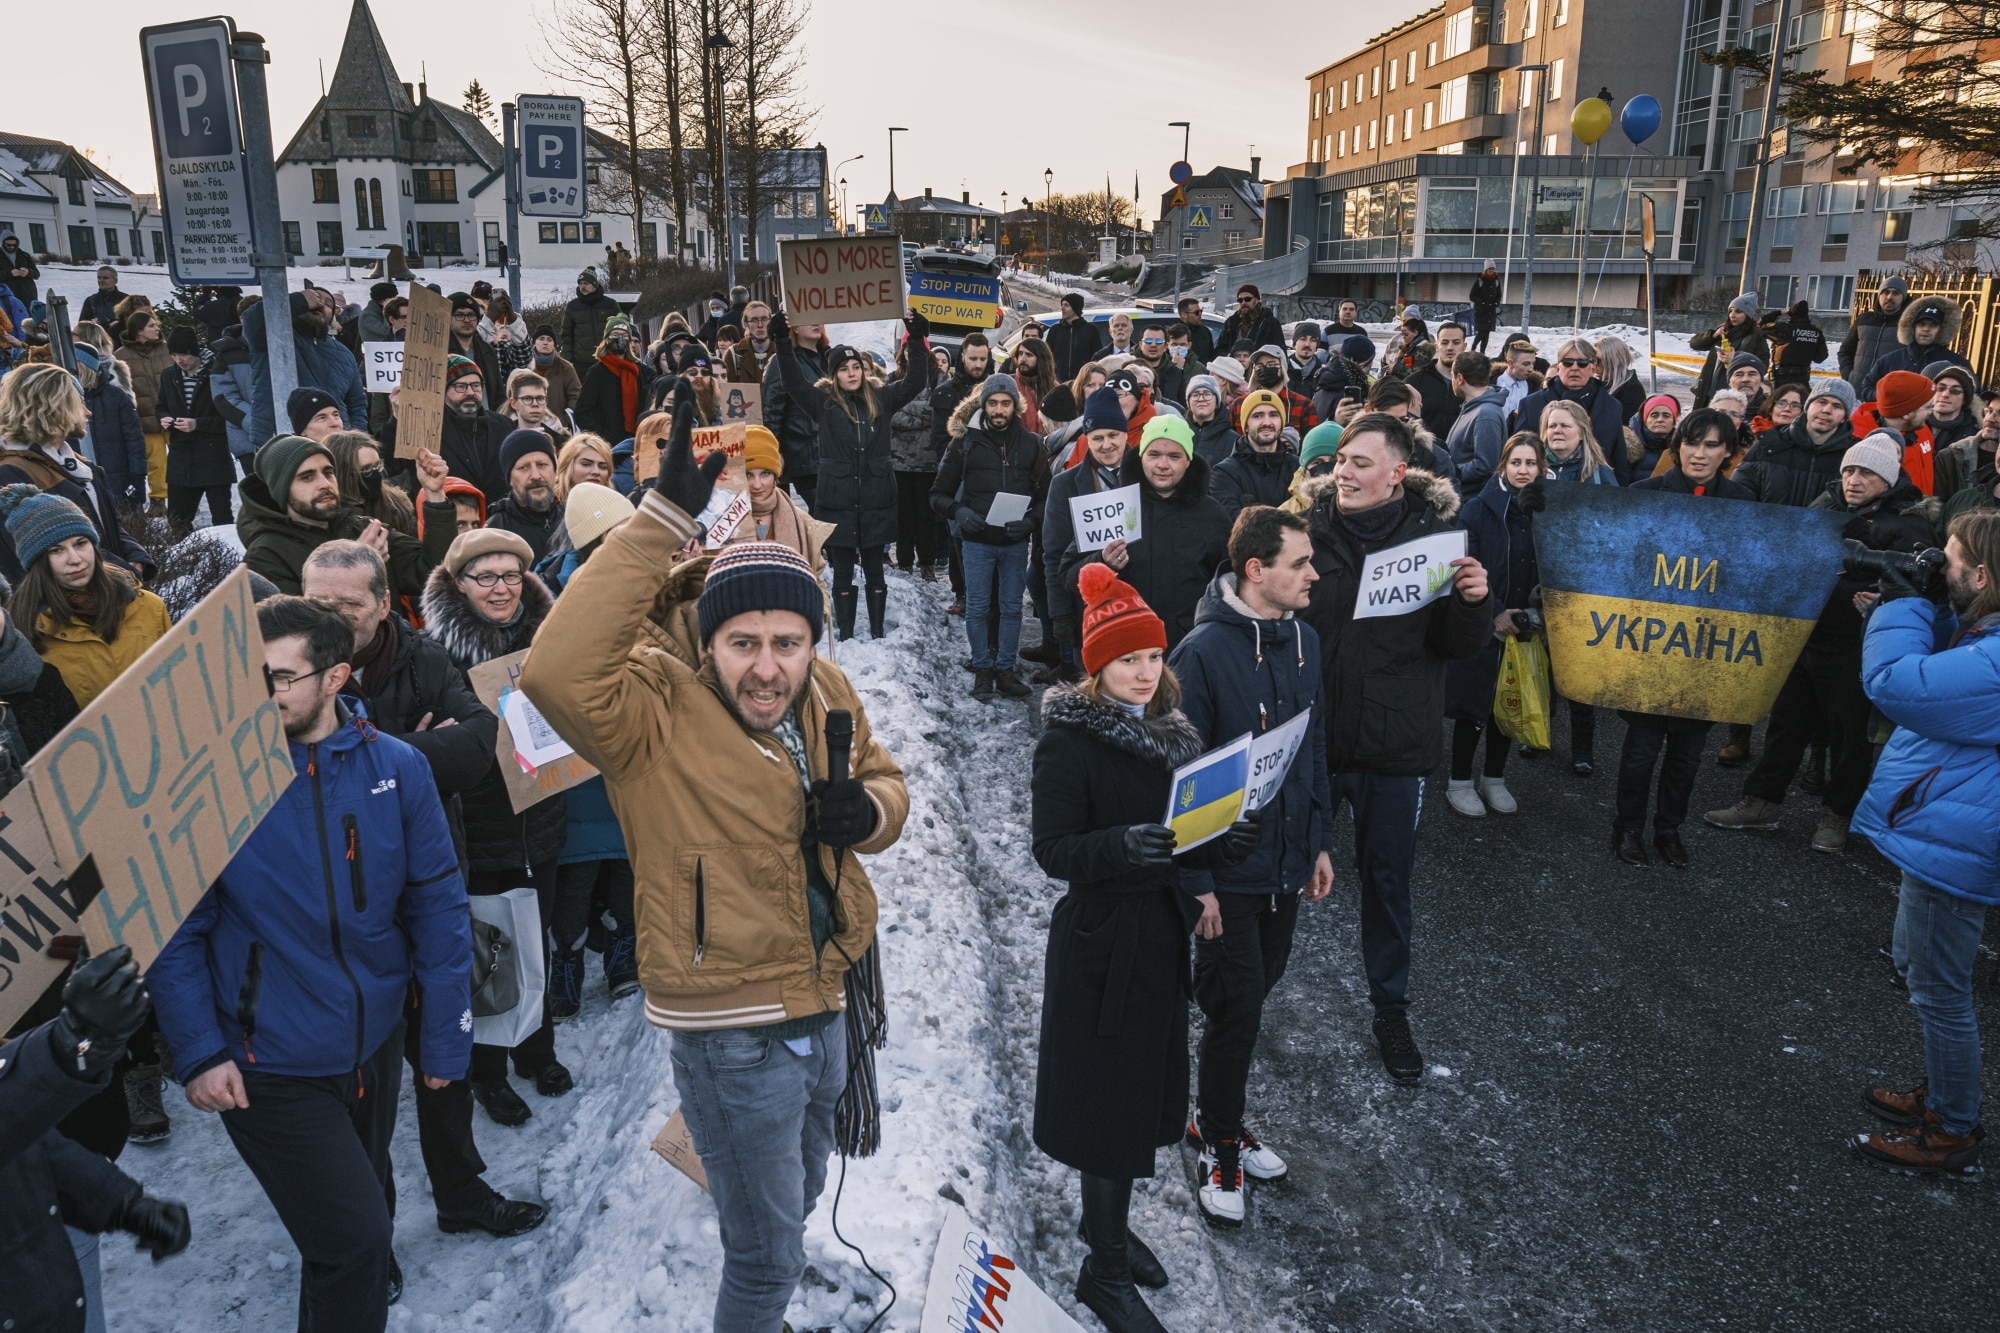 Protests in Reykjavík